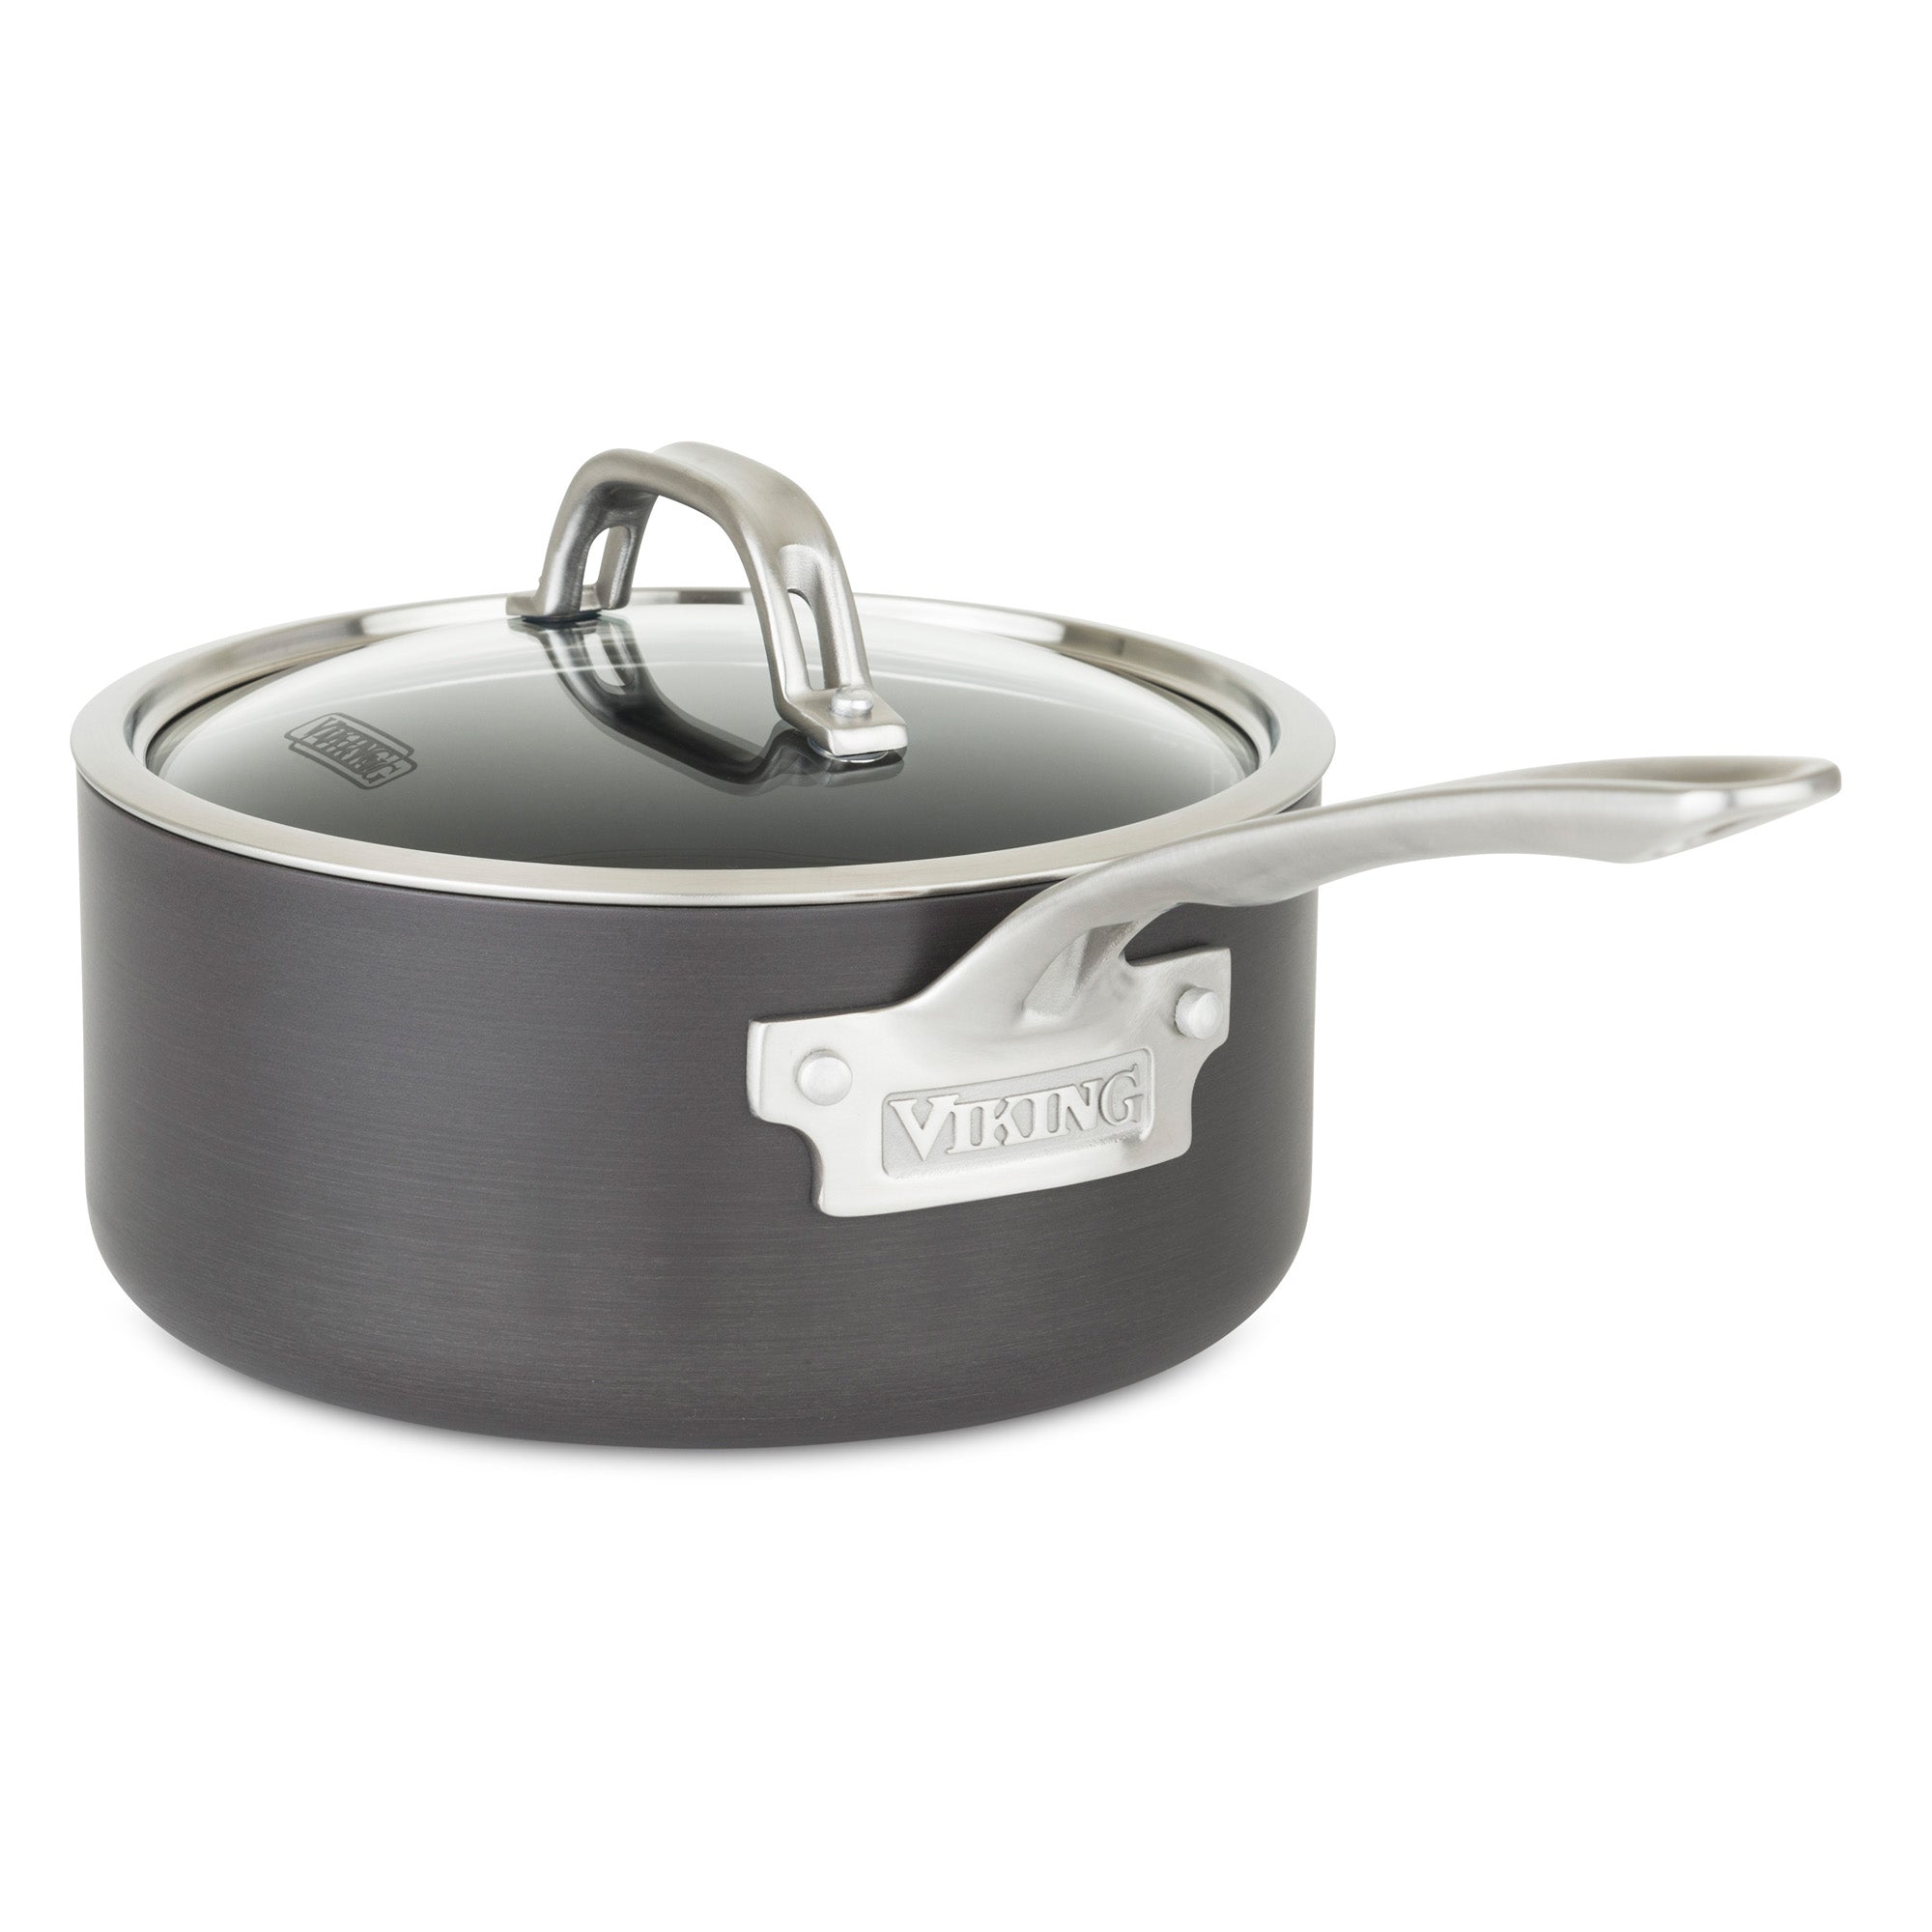 BIALETTI 3 Quart Stock Pot, Sauce Pan with Lid - Nonstick Anodized Aluminum